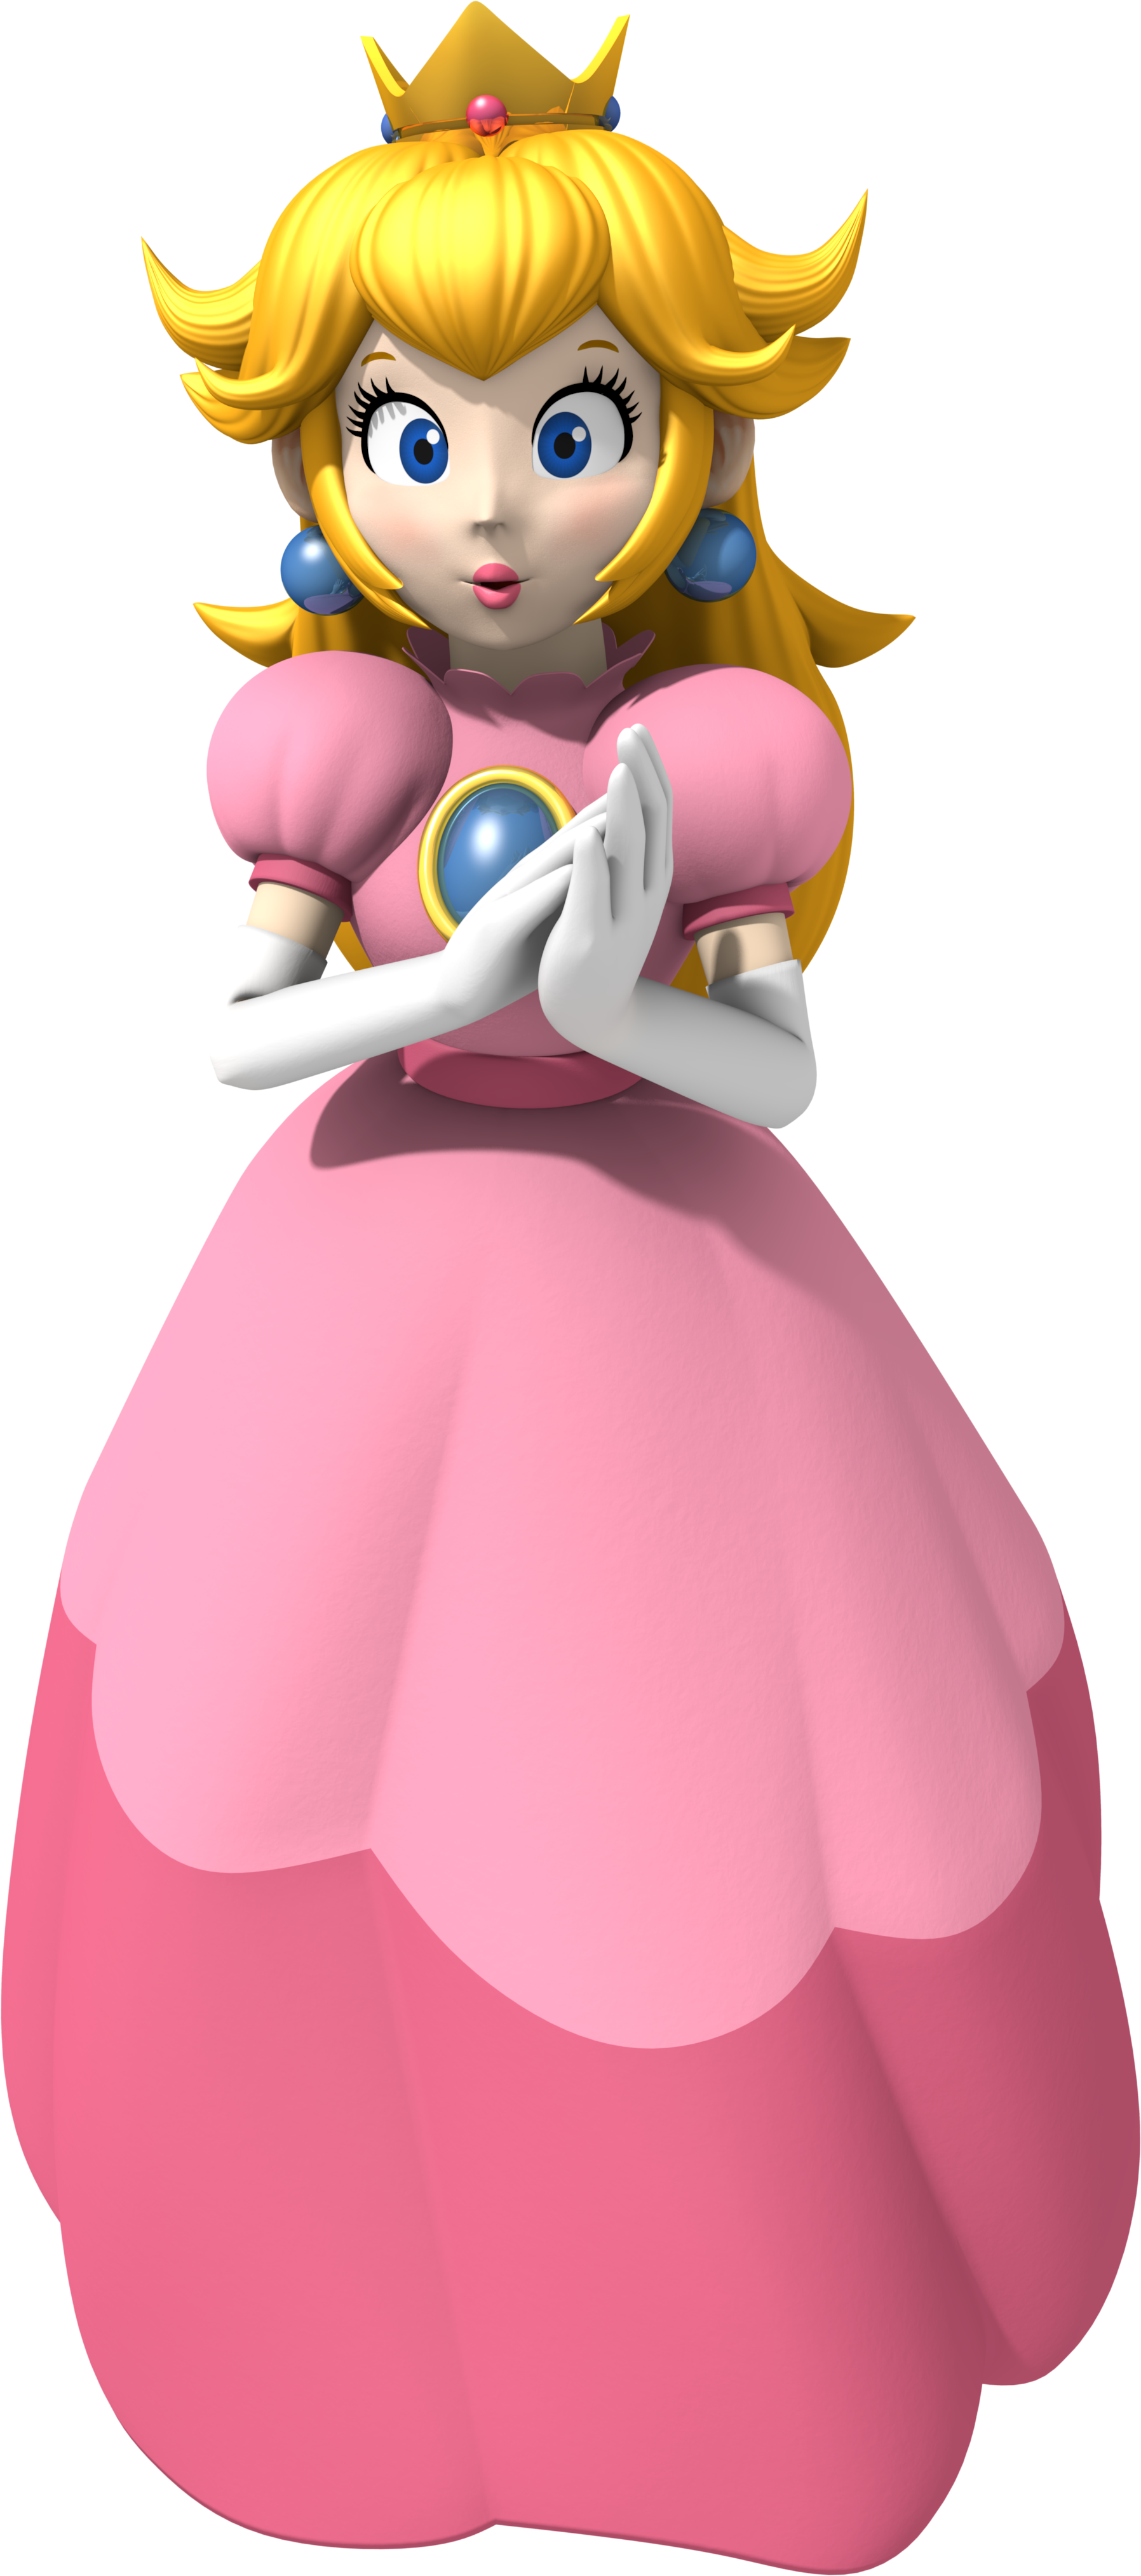 A Cartoon Character Of A Princess